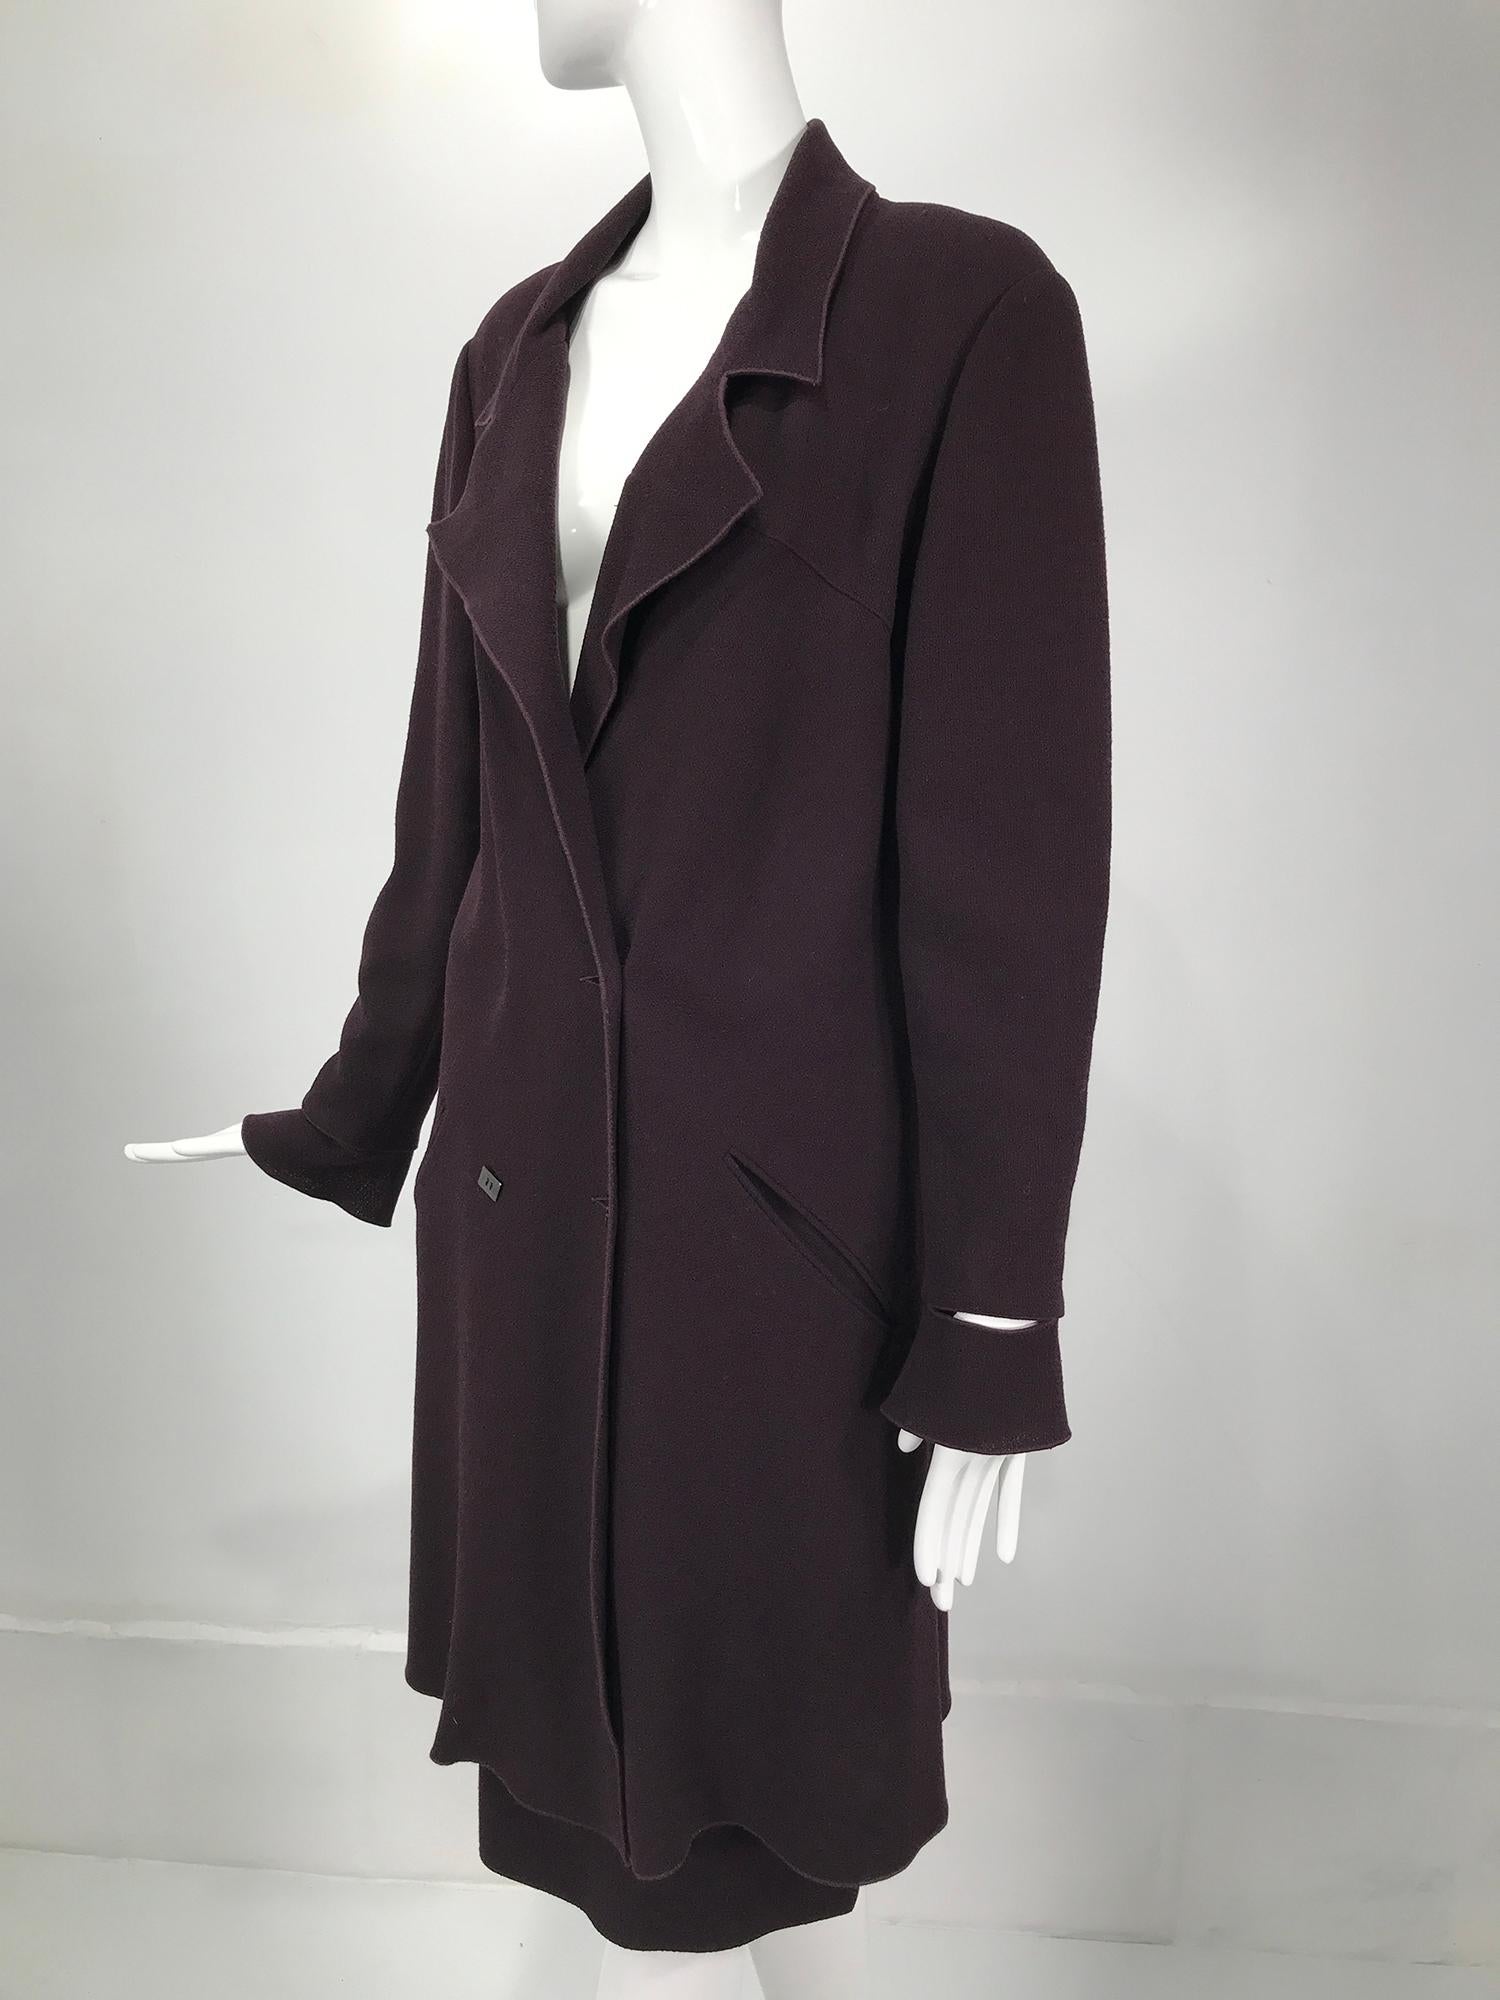 Karl Lagerfeld Burgundy Wool Crepe Coat & Skirt Set 1980s  2